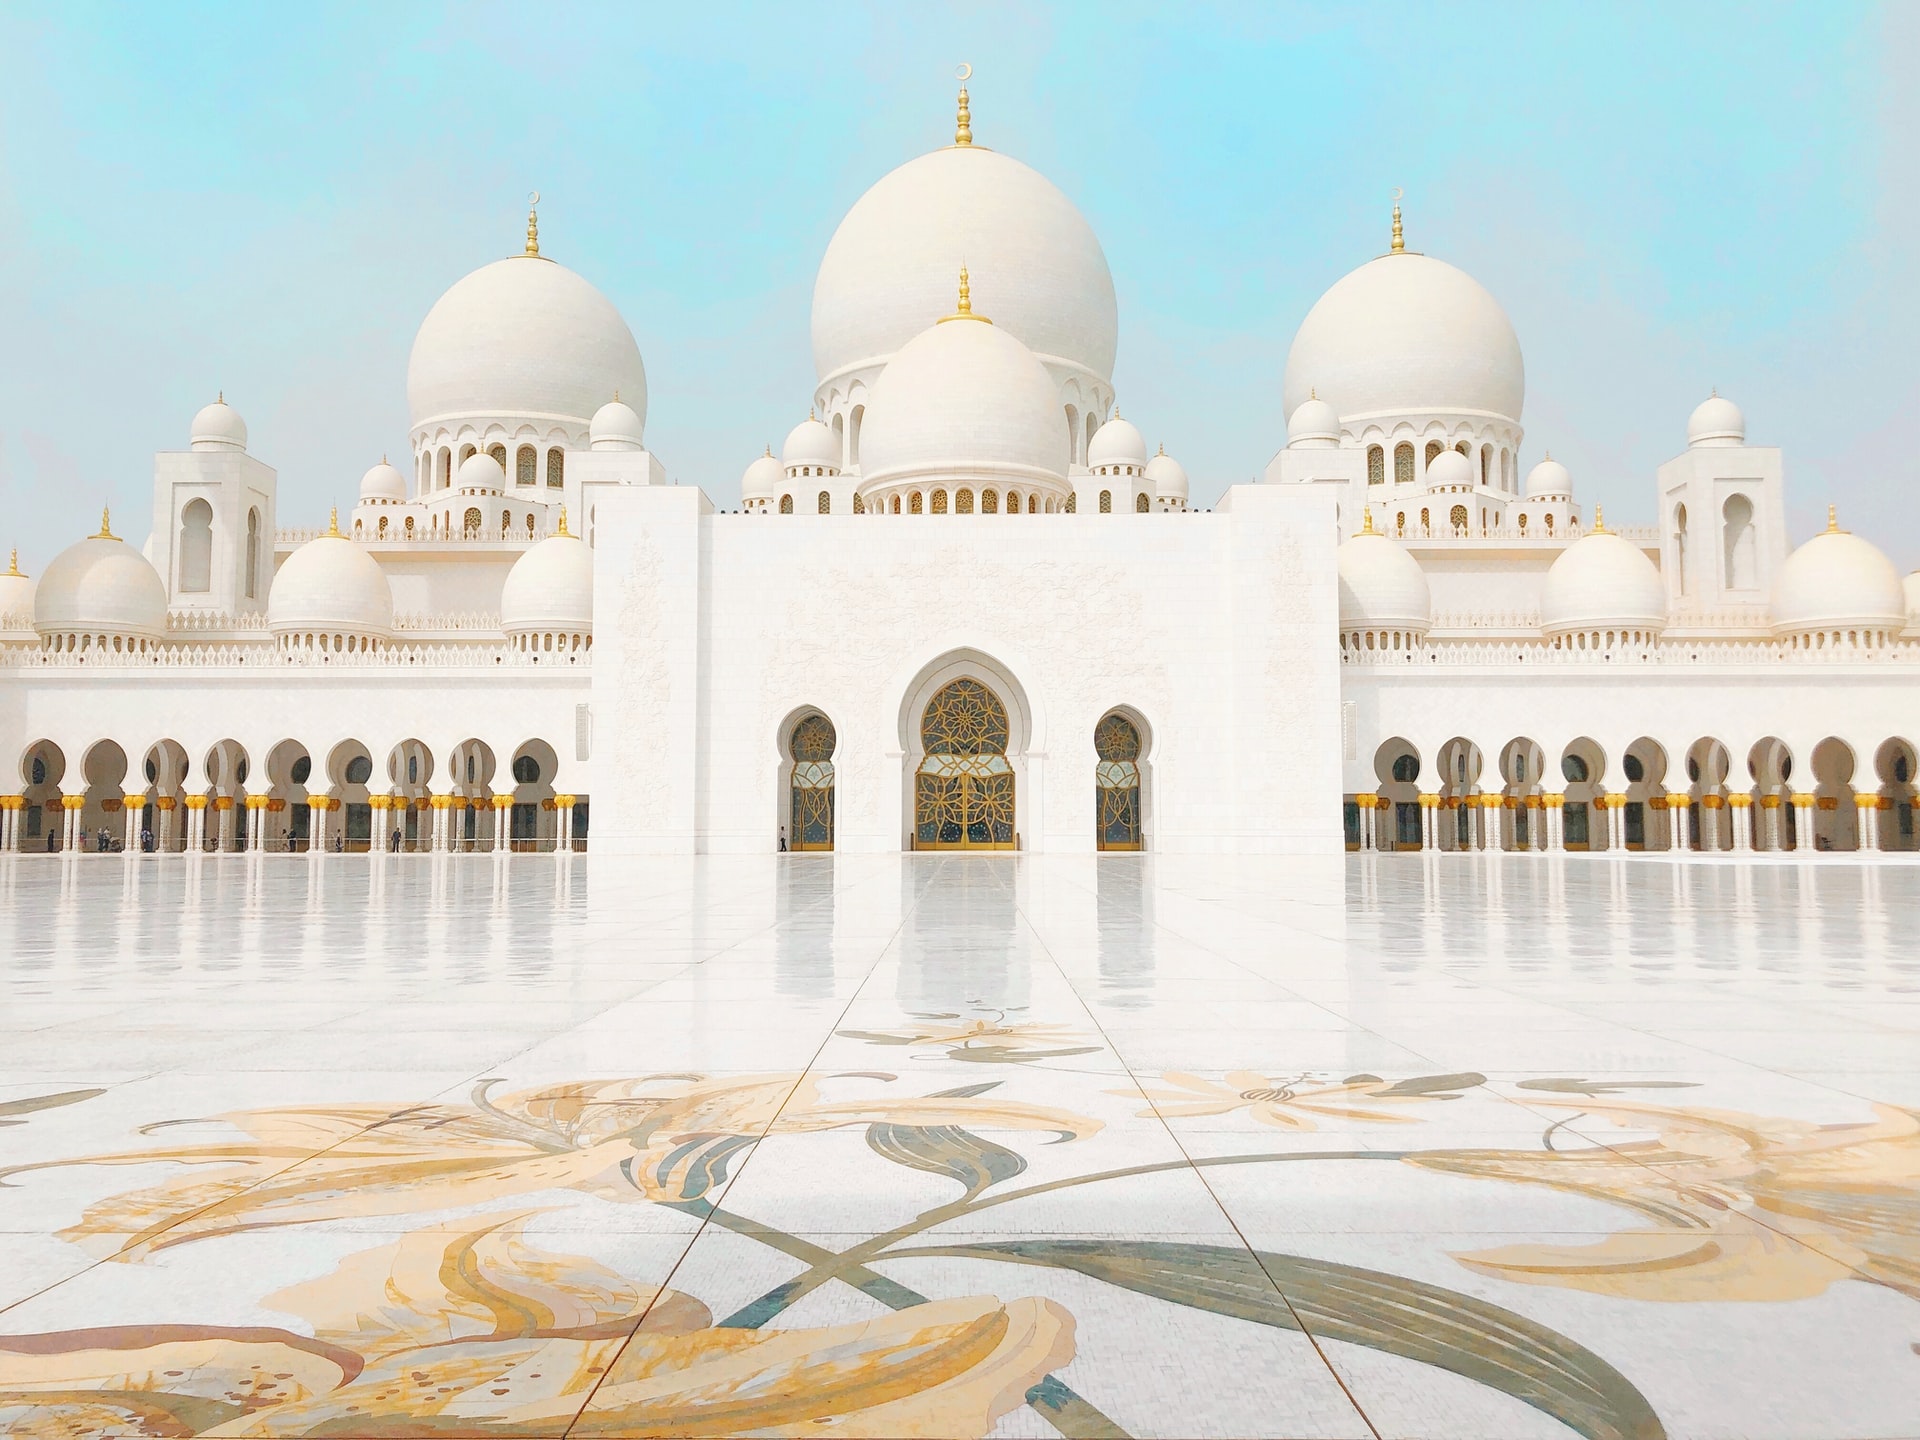 Private Abu Dhabi city tour from Dubai with Louvre and Qasr Al Watan